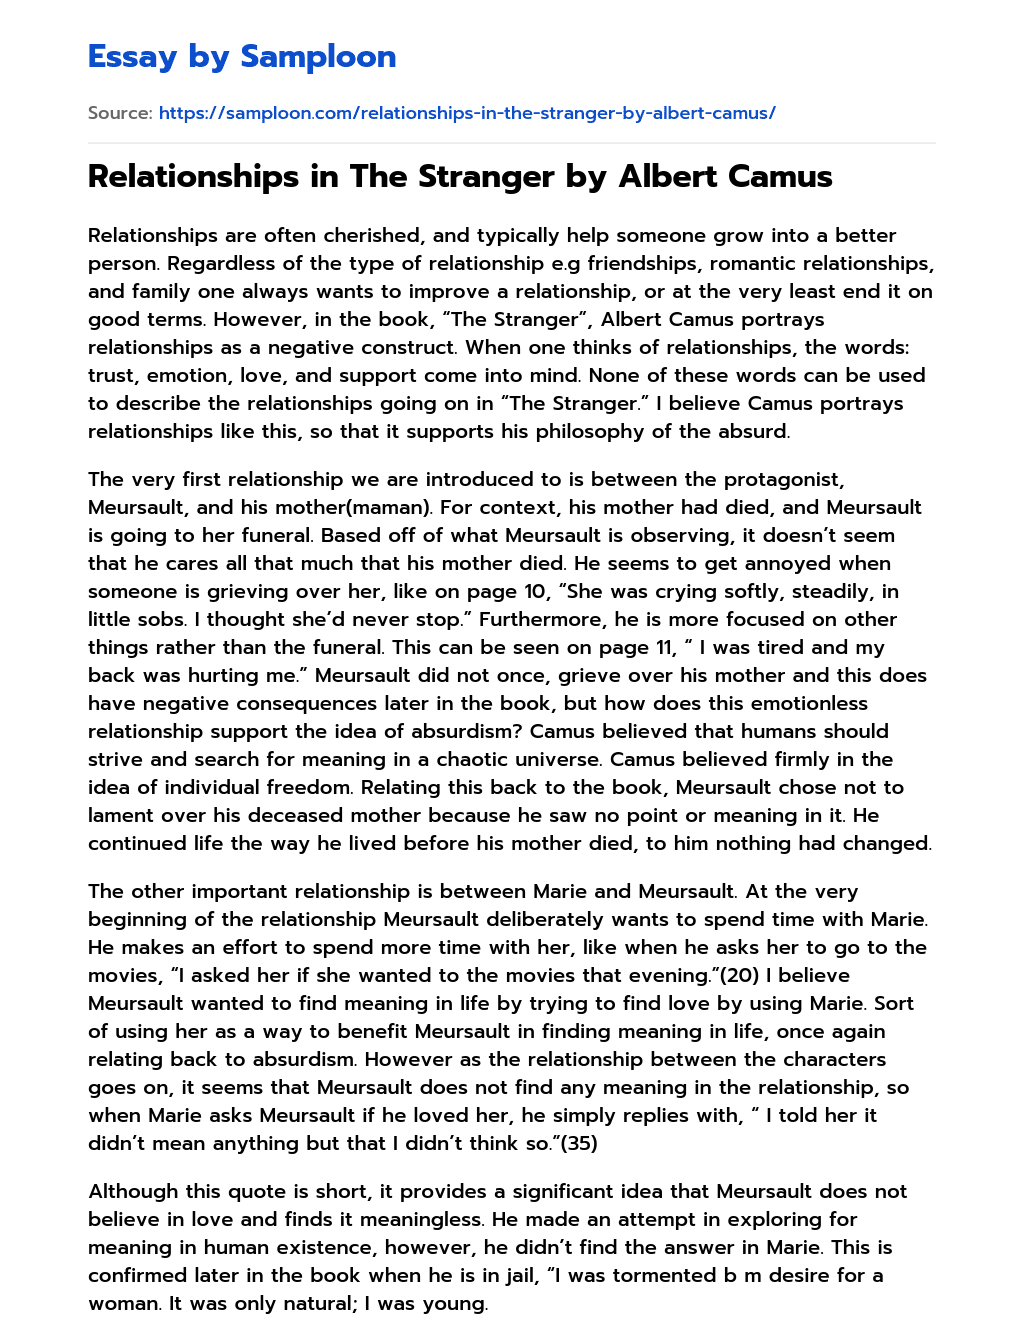 Relationships in The Stranger by Albert Camus essay